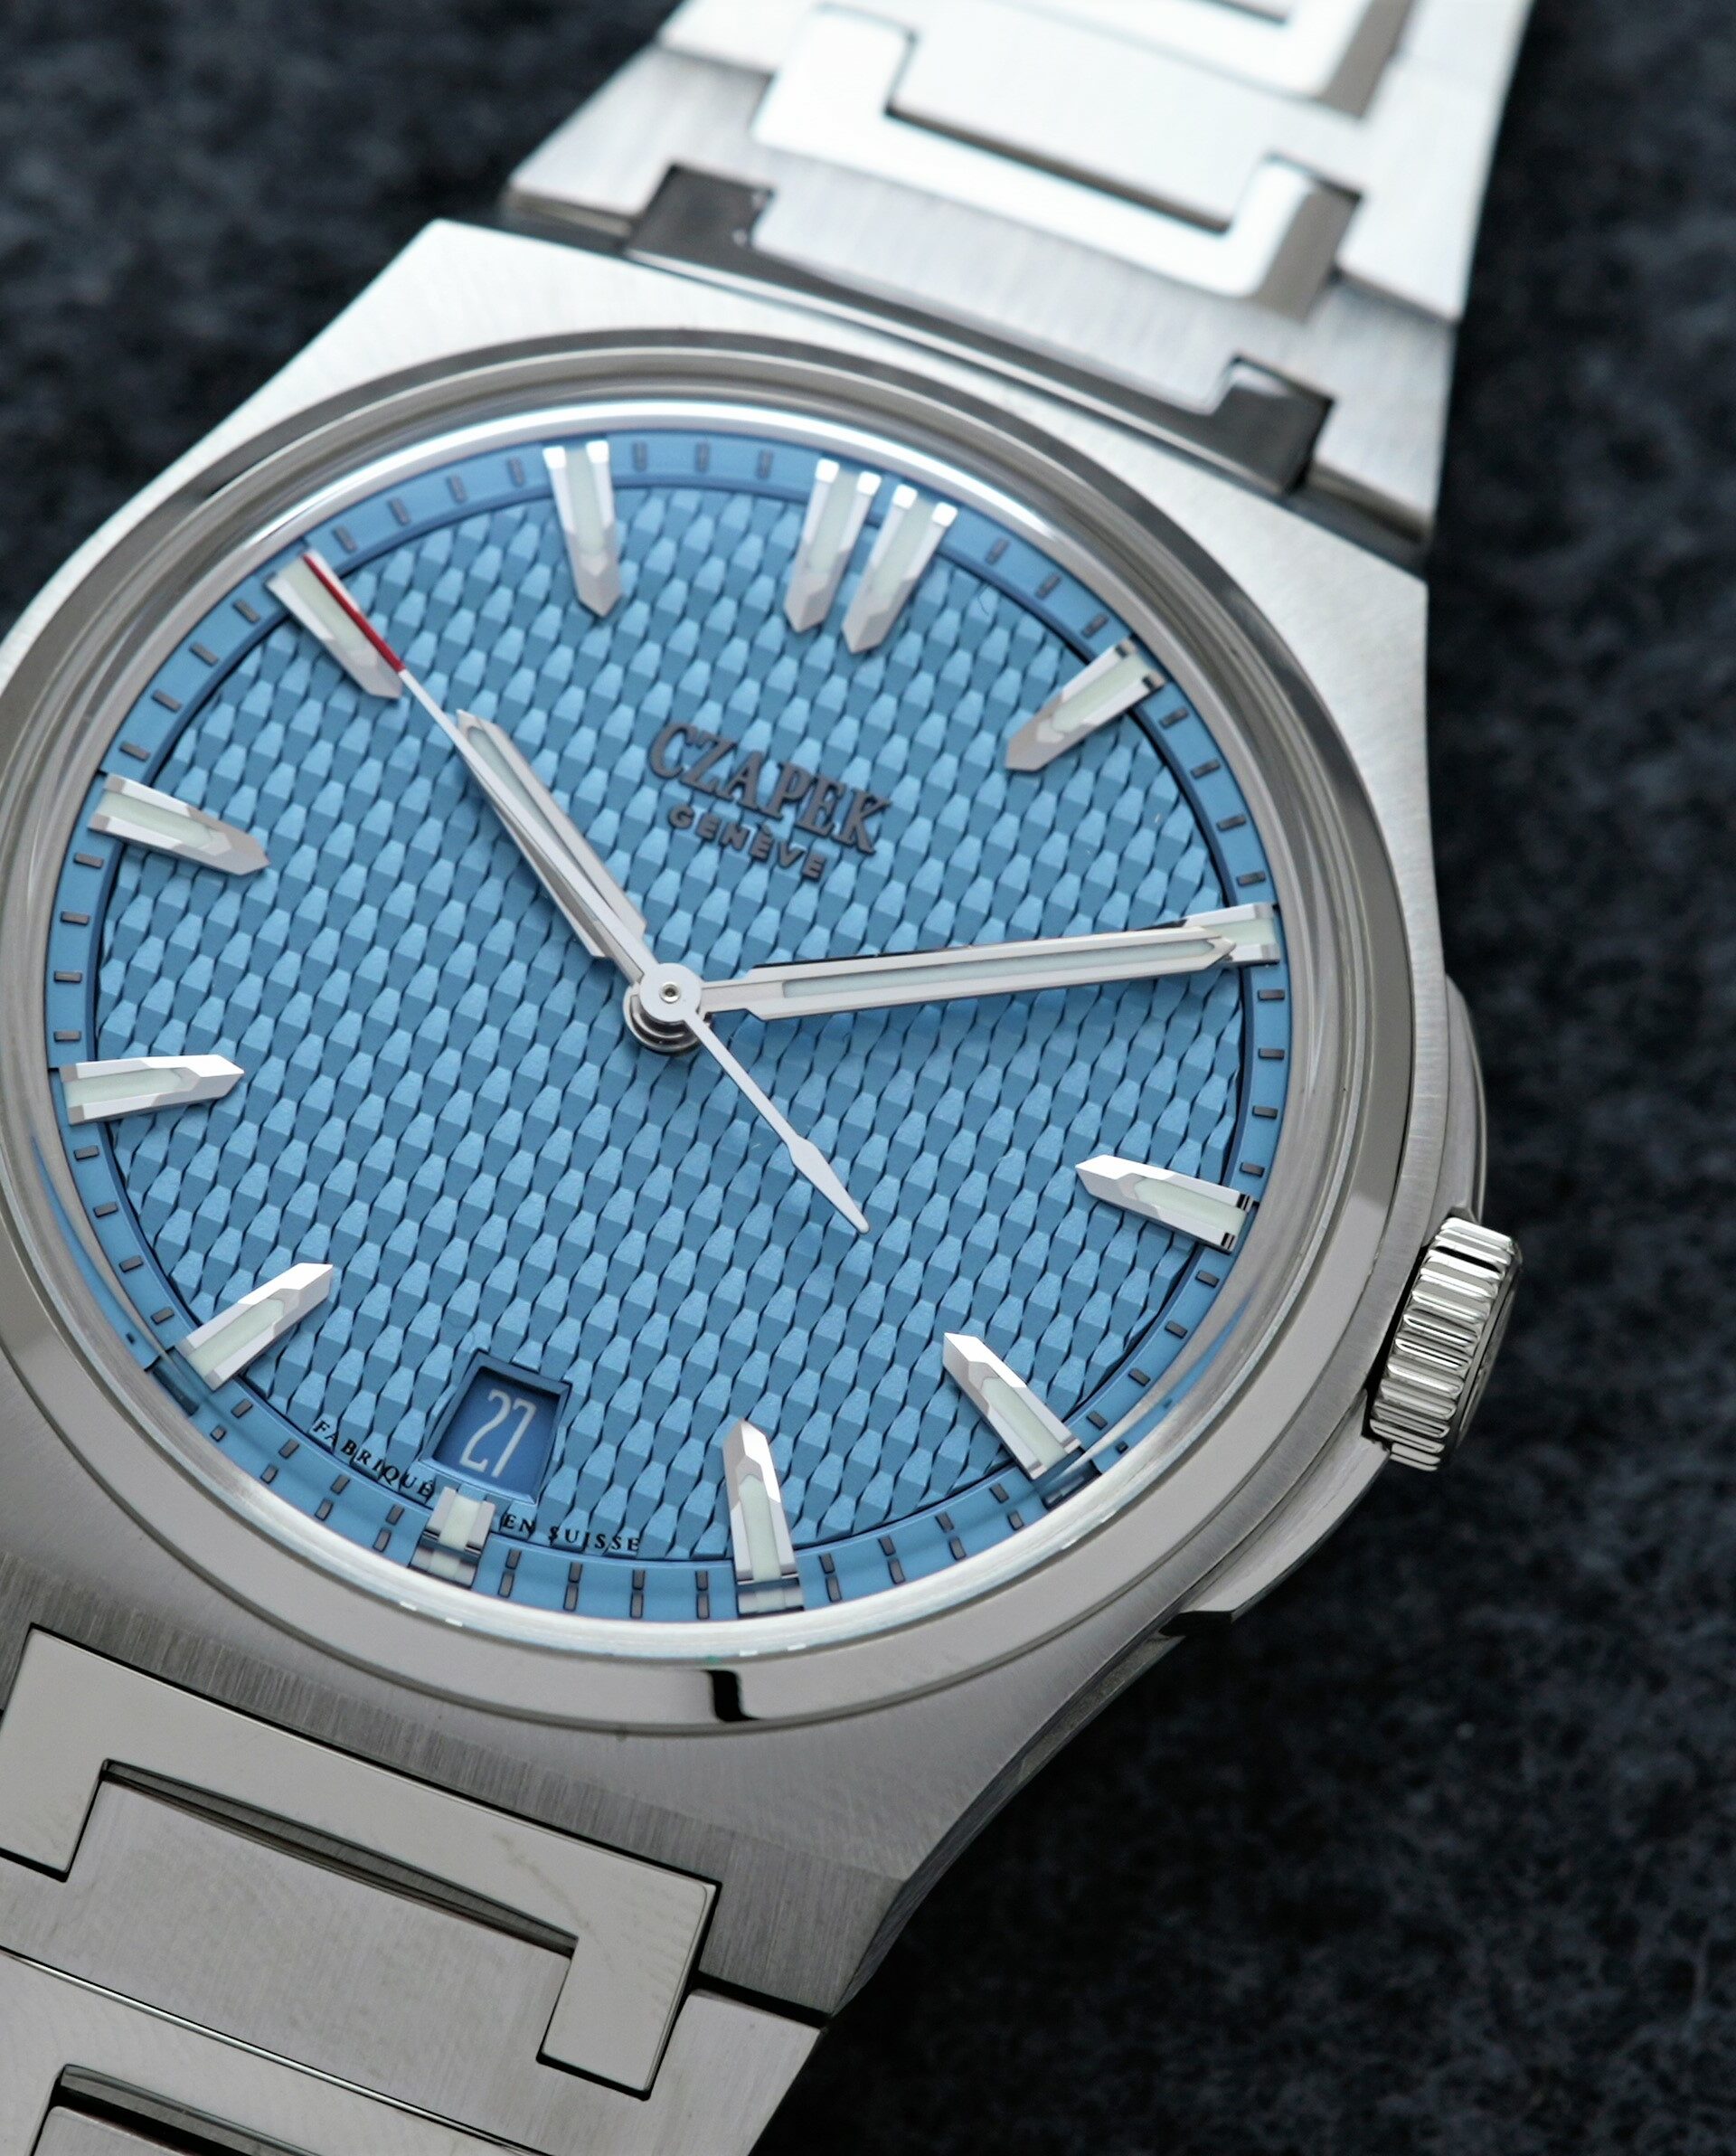 Czapek Passage de Drake Rare Glacier Blue Limited Production watch featured on an angle under white light.